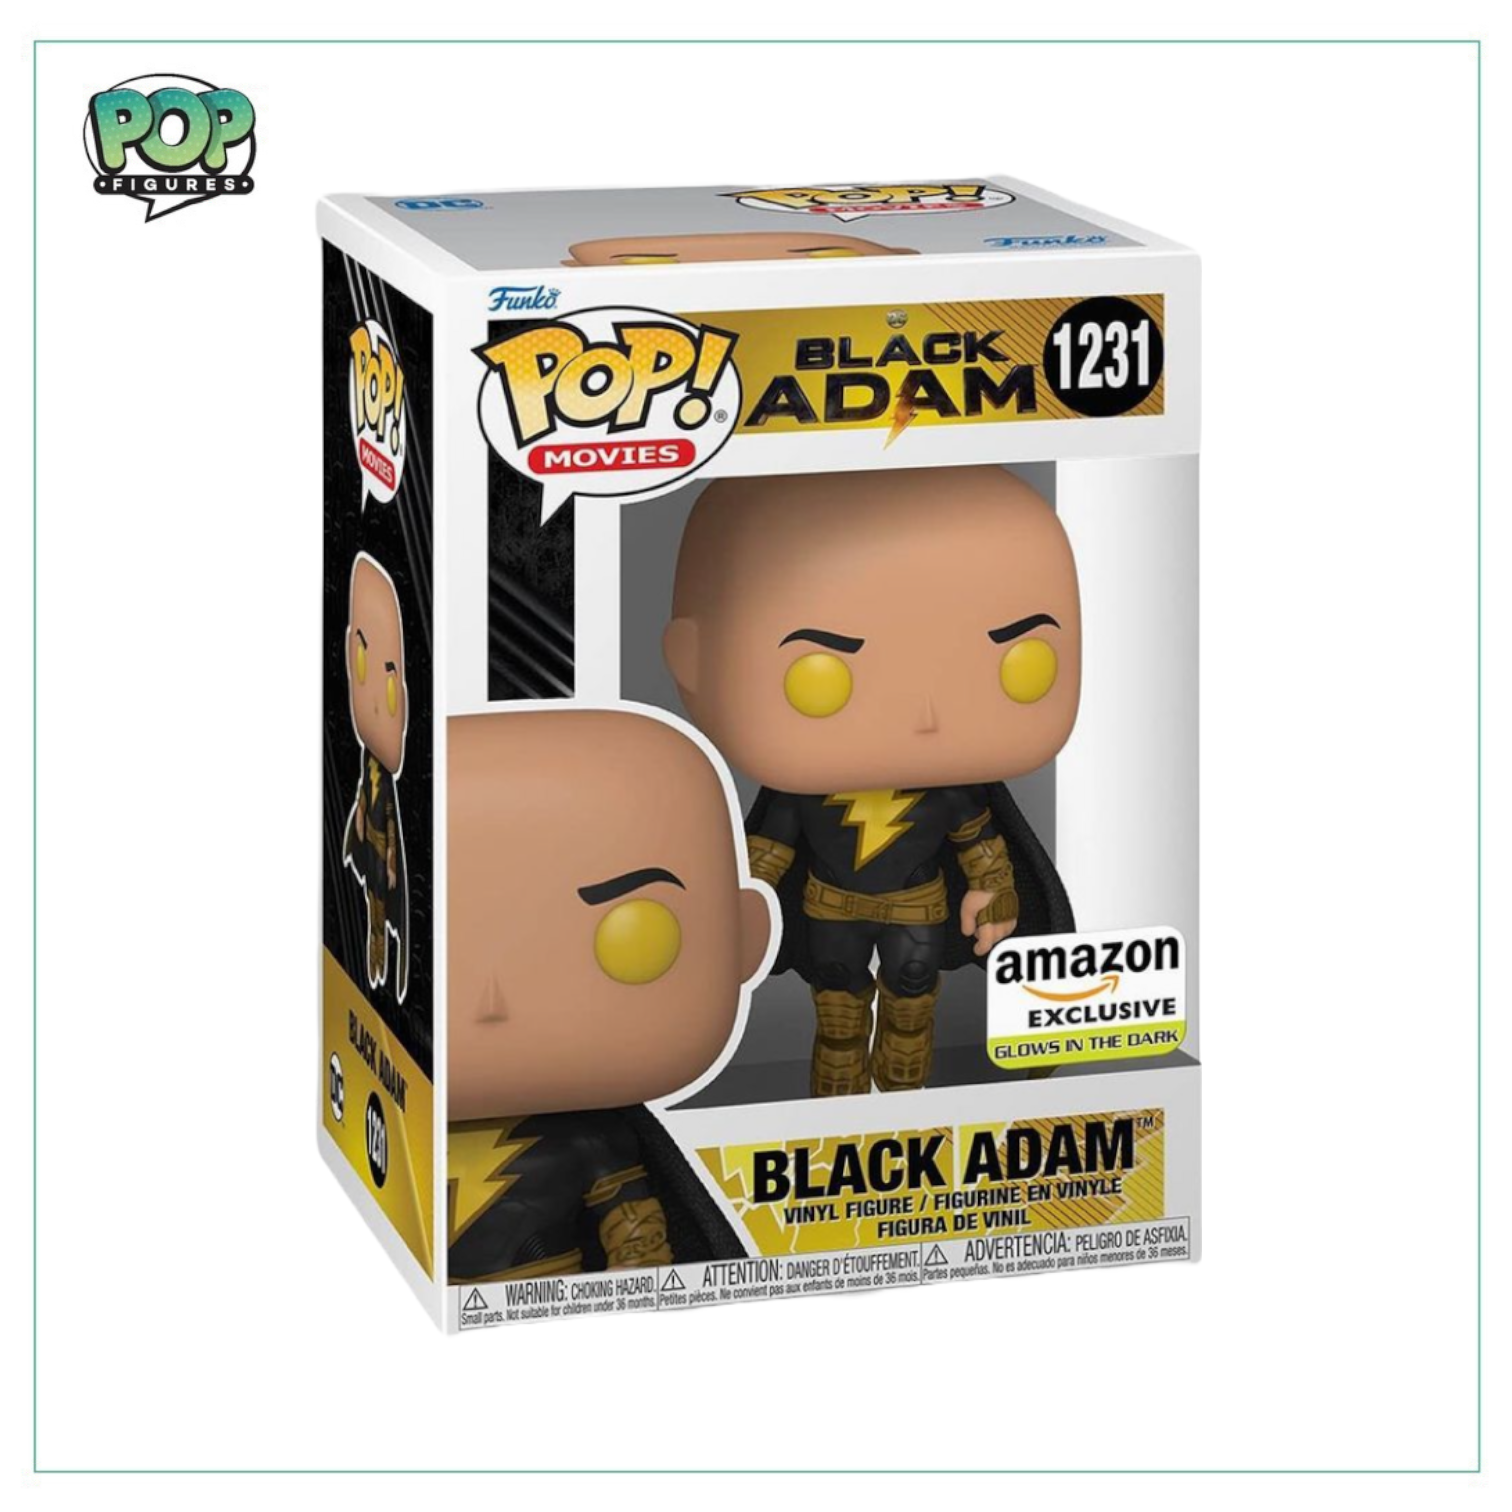 Black Adam #1231 (Glows in The Dark) Funko Pop! Black Adam - Amazon Exclusive